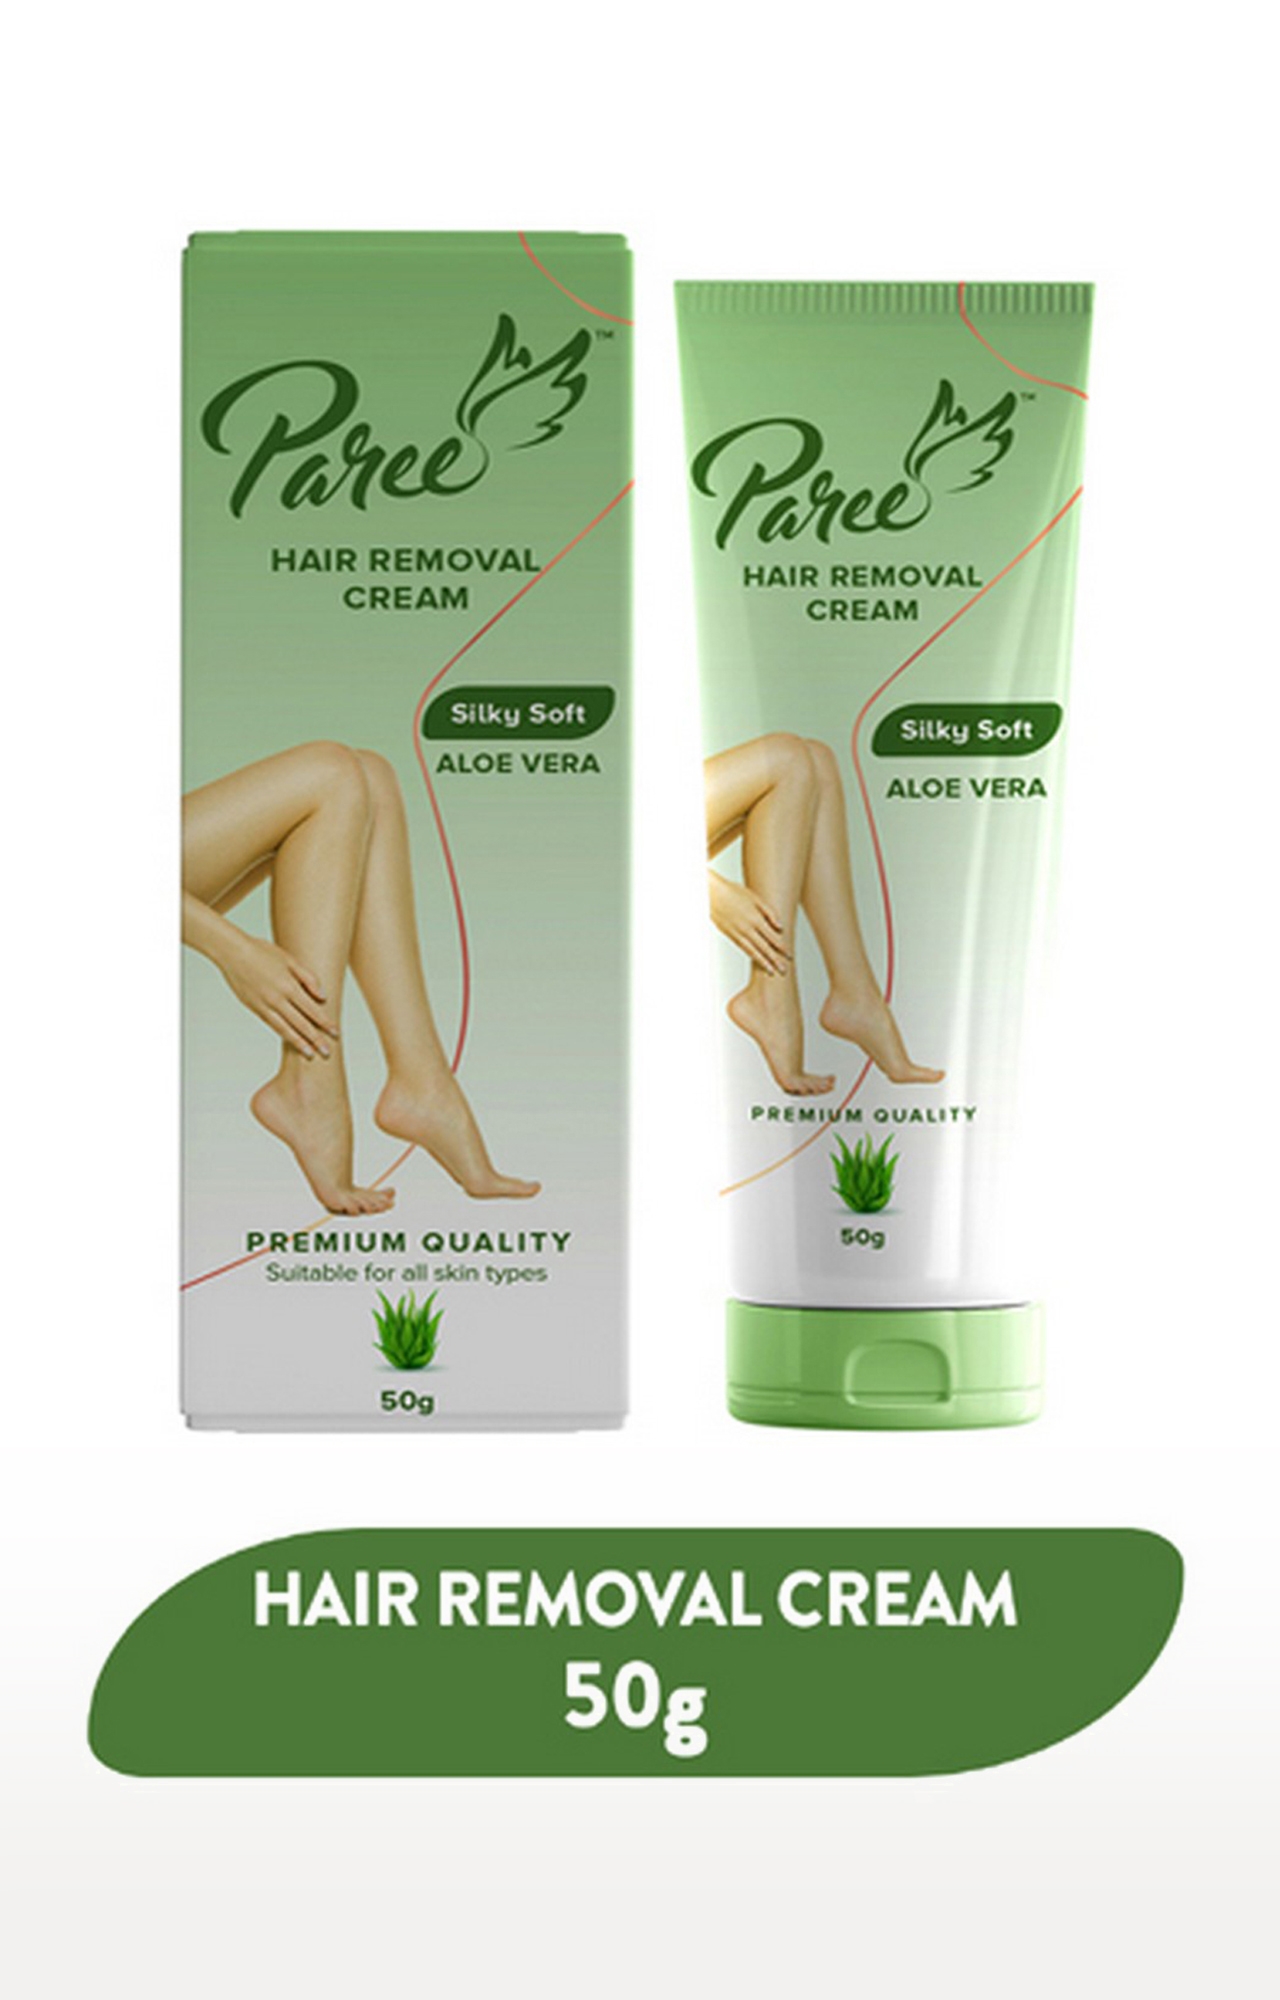 Paree | Paree Hair Removal Cream Silky Soft With Aloe Vera (50g) | For Sensitive Skin